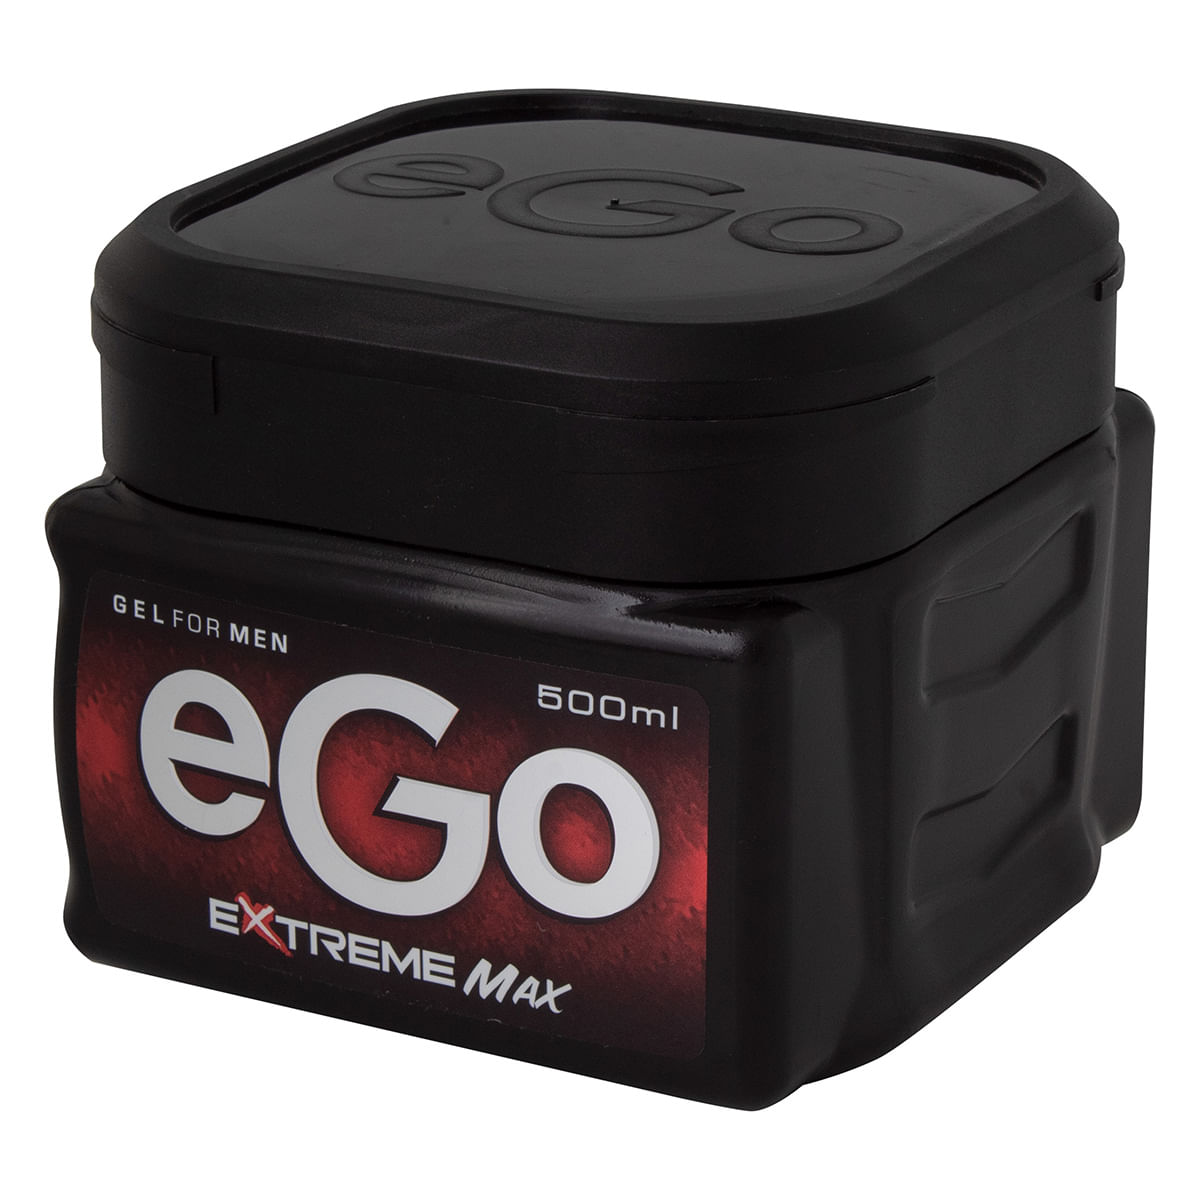 EGO EXTREME MAX - Gel para cabello - EXTREME MAX x 500 g